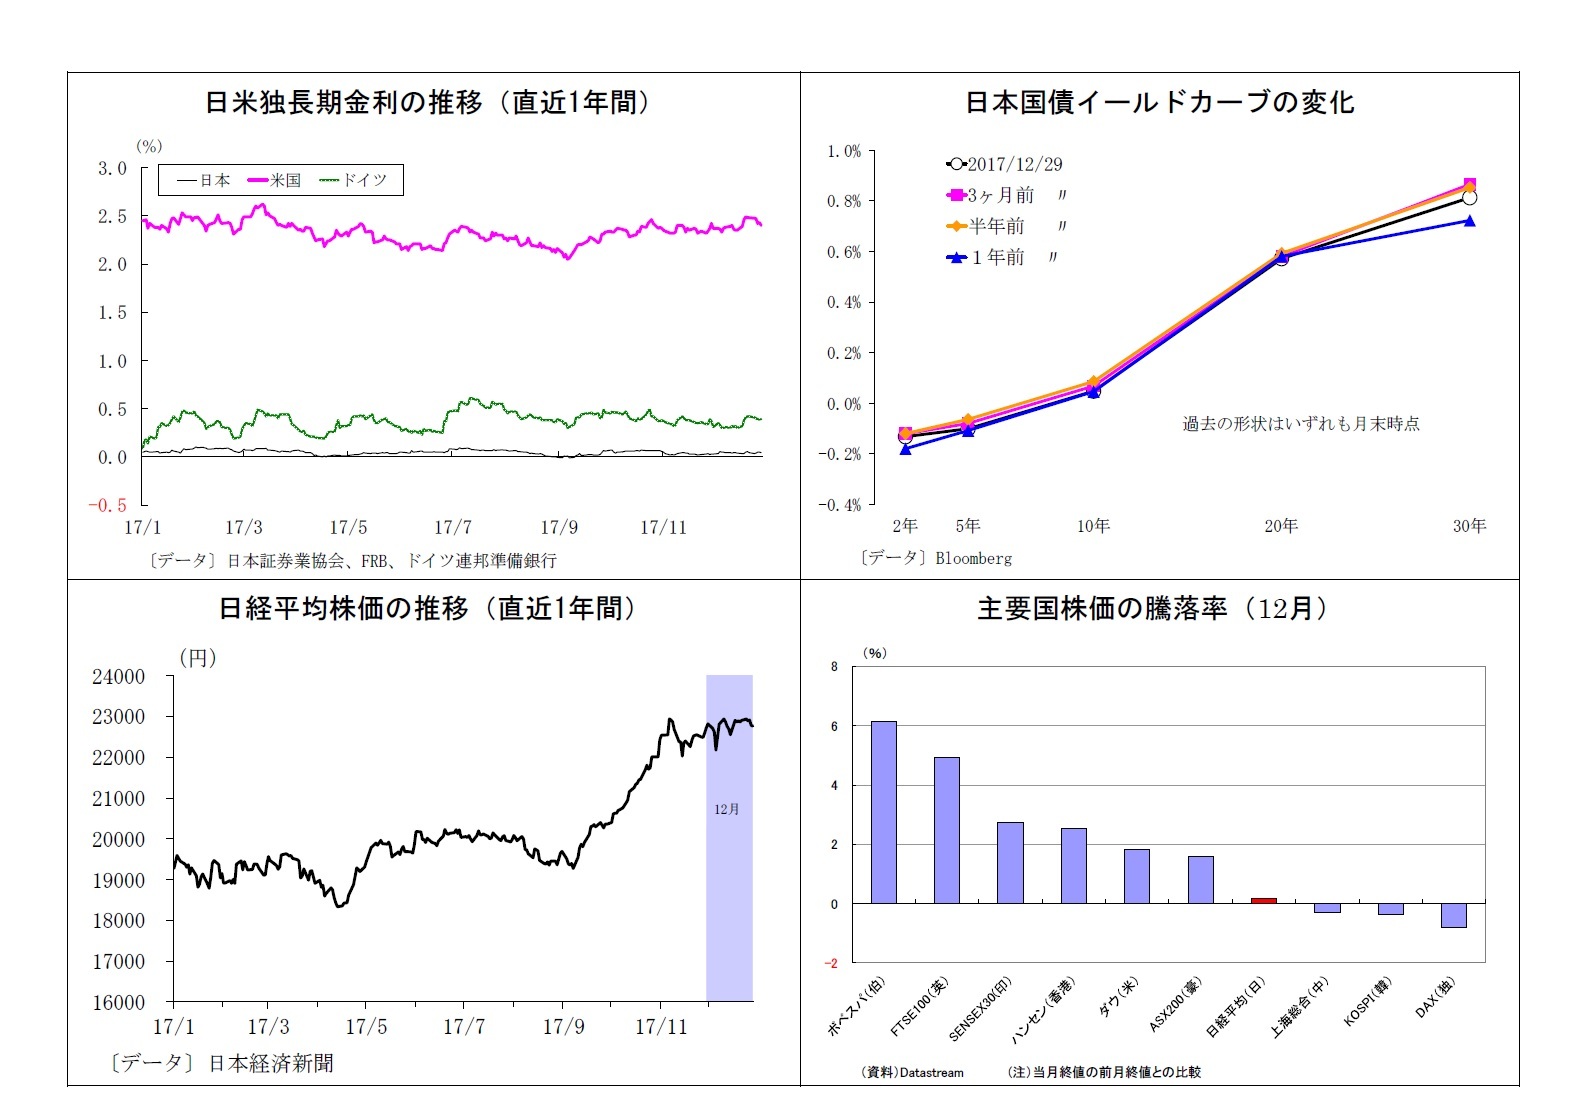 日米独長期金利の推移（直近1年間）/日本国債イールドカーブの変化/日経平均株価の推移（直近1年間）/主要国株価の騰落率（12月）